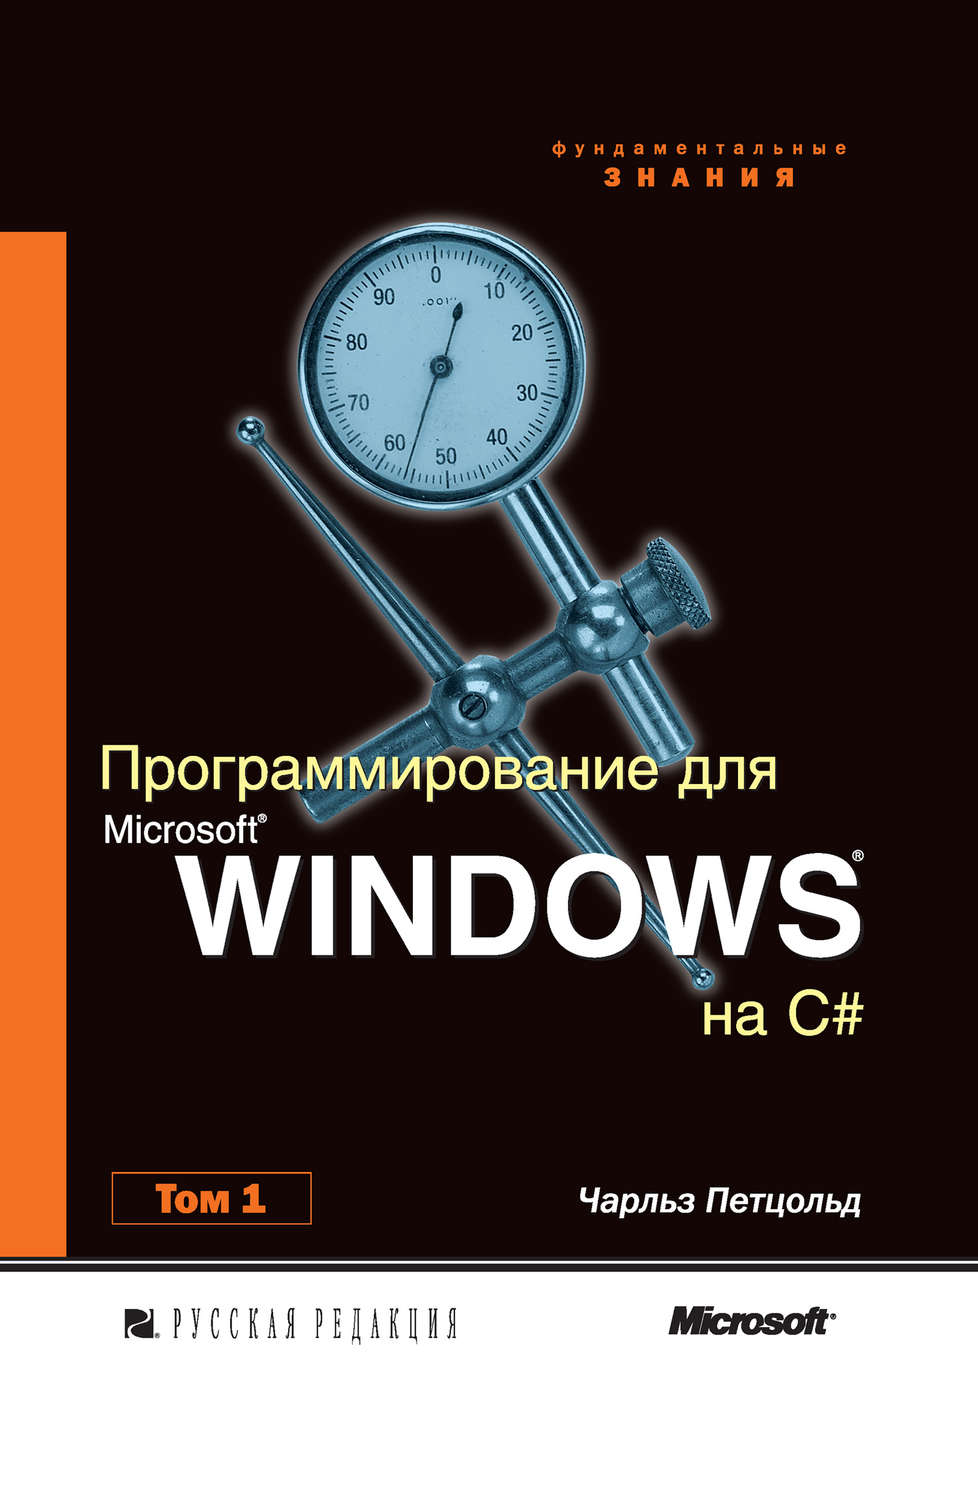 Книги про программирование. Программирование для Windows Петцольд. Книги по программированию.